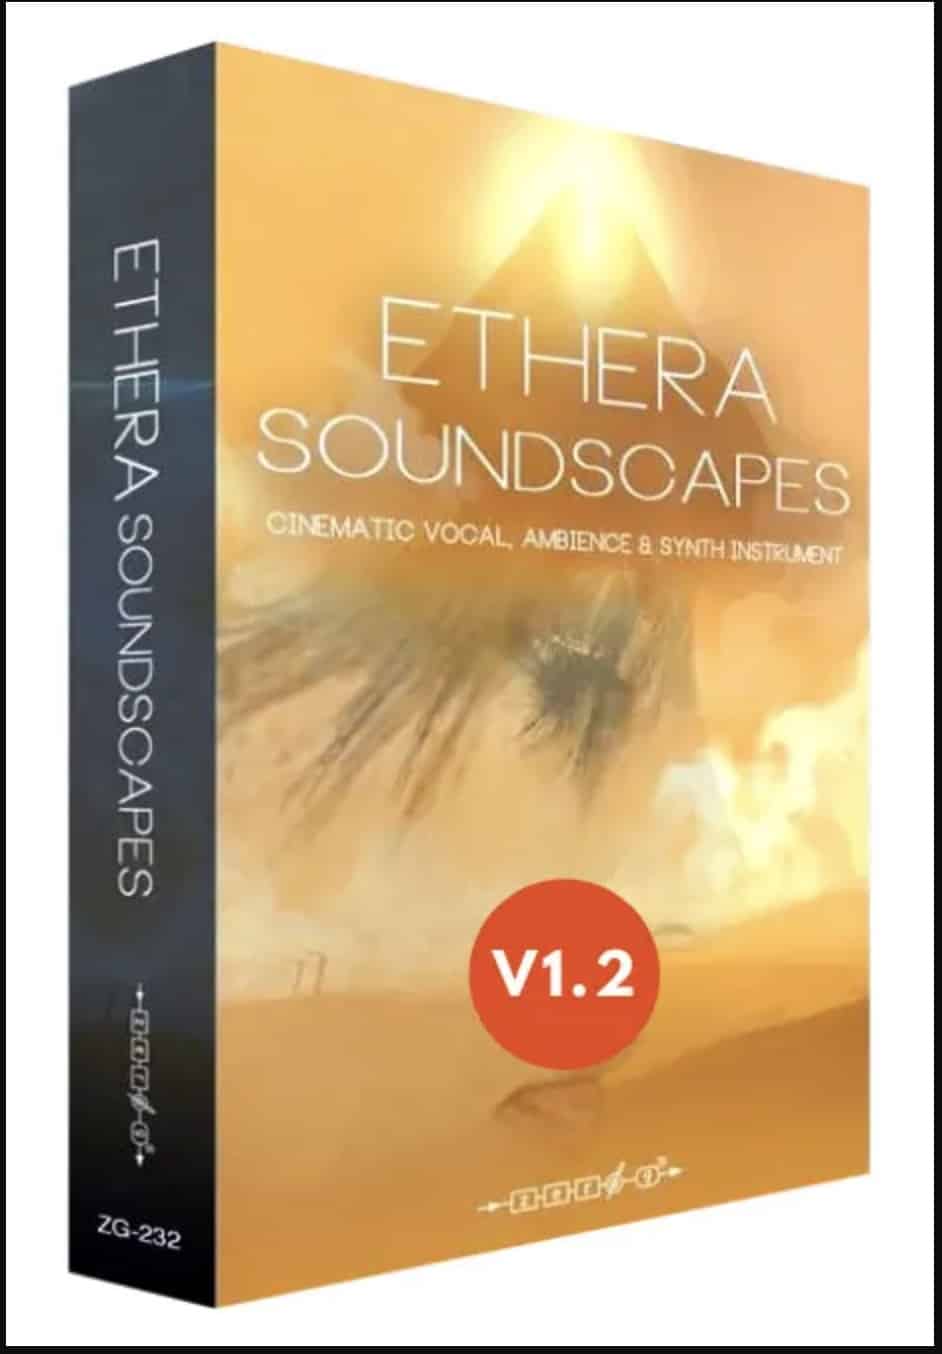 Zero-G ETHERA Soundscapes V1.2 SALE